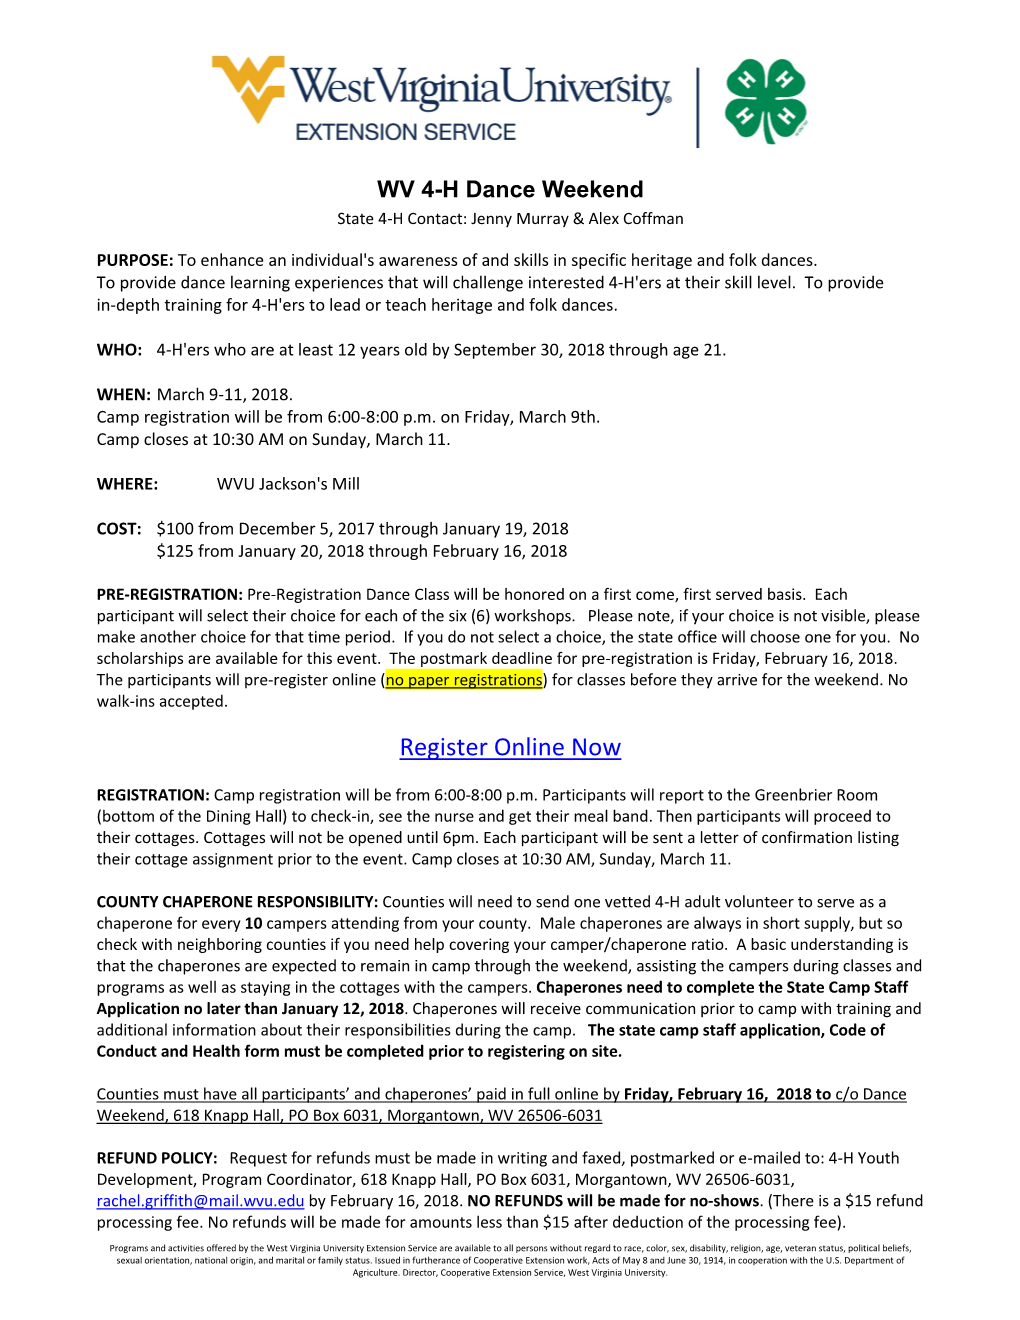 Dance Weekend Information Packet